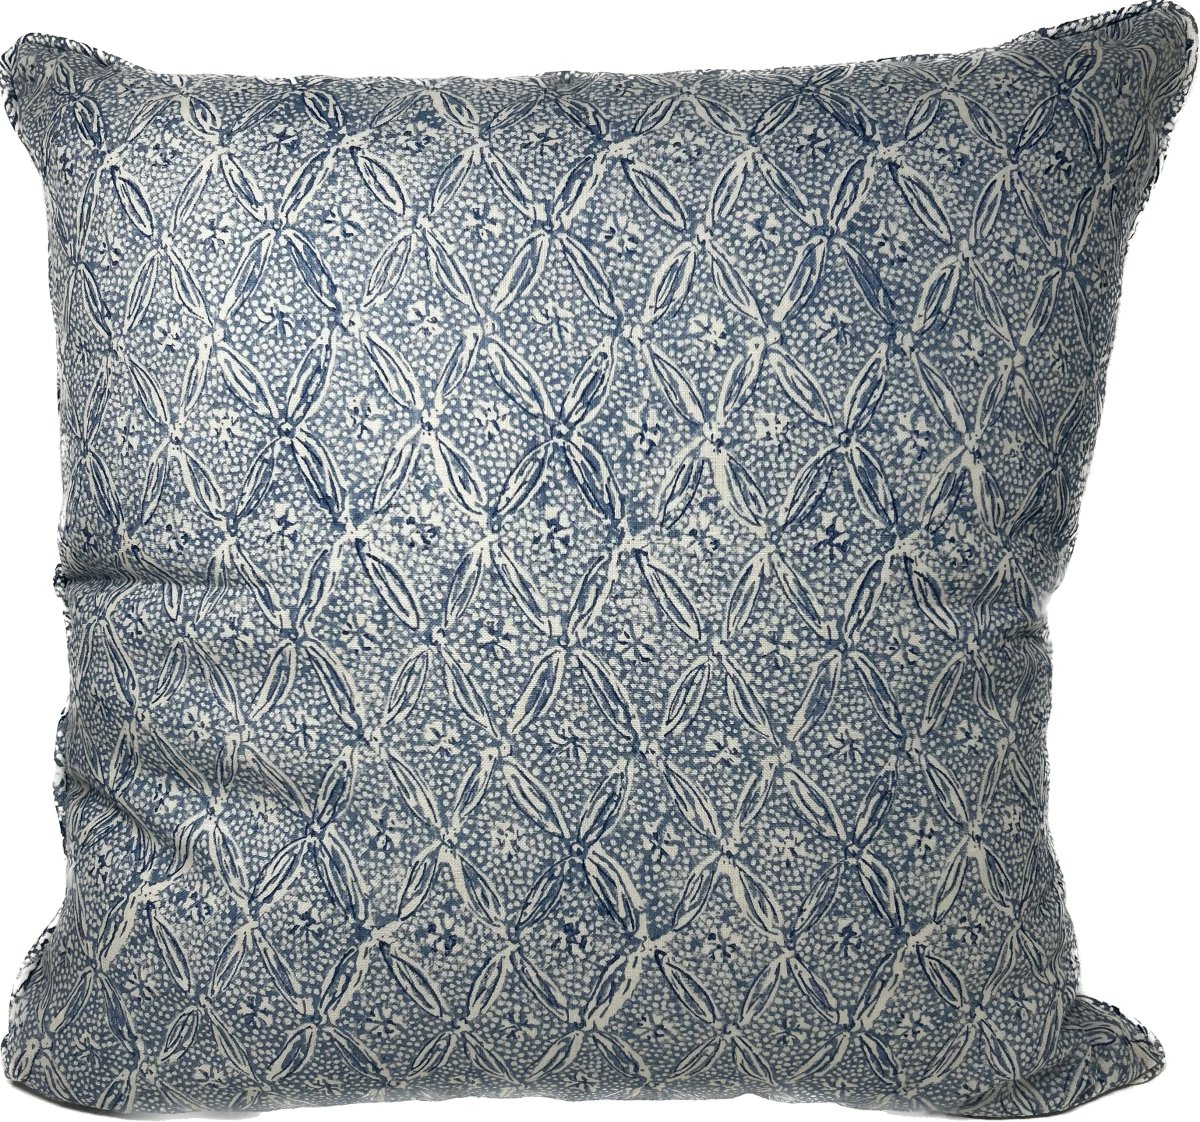 Block Printed Linen Cushion 50 x 50 cm - Homebody Denver